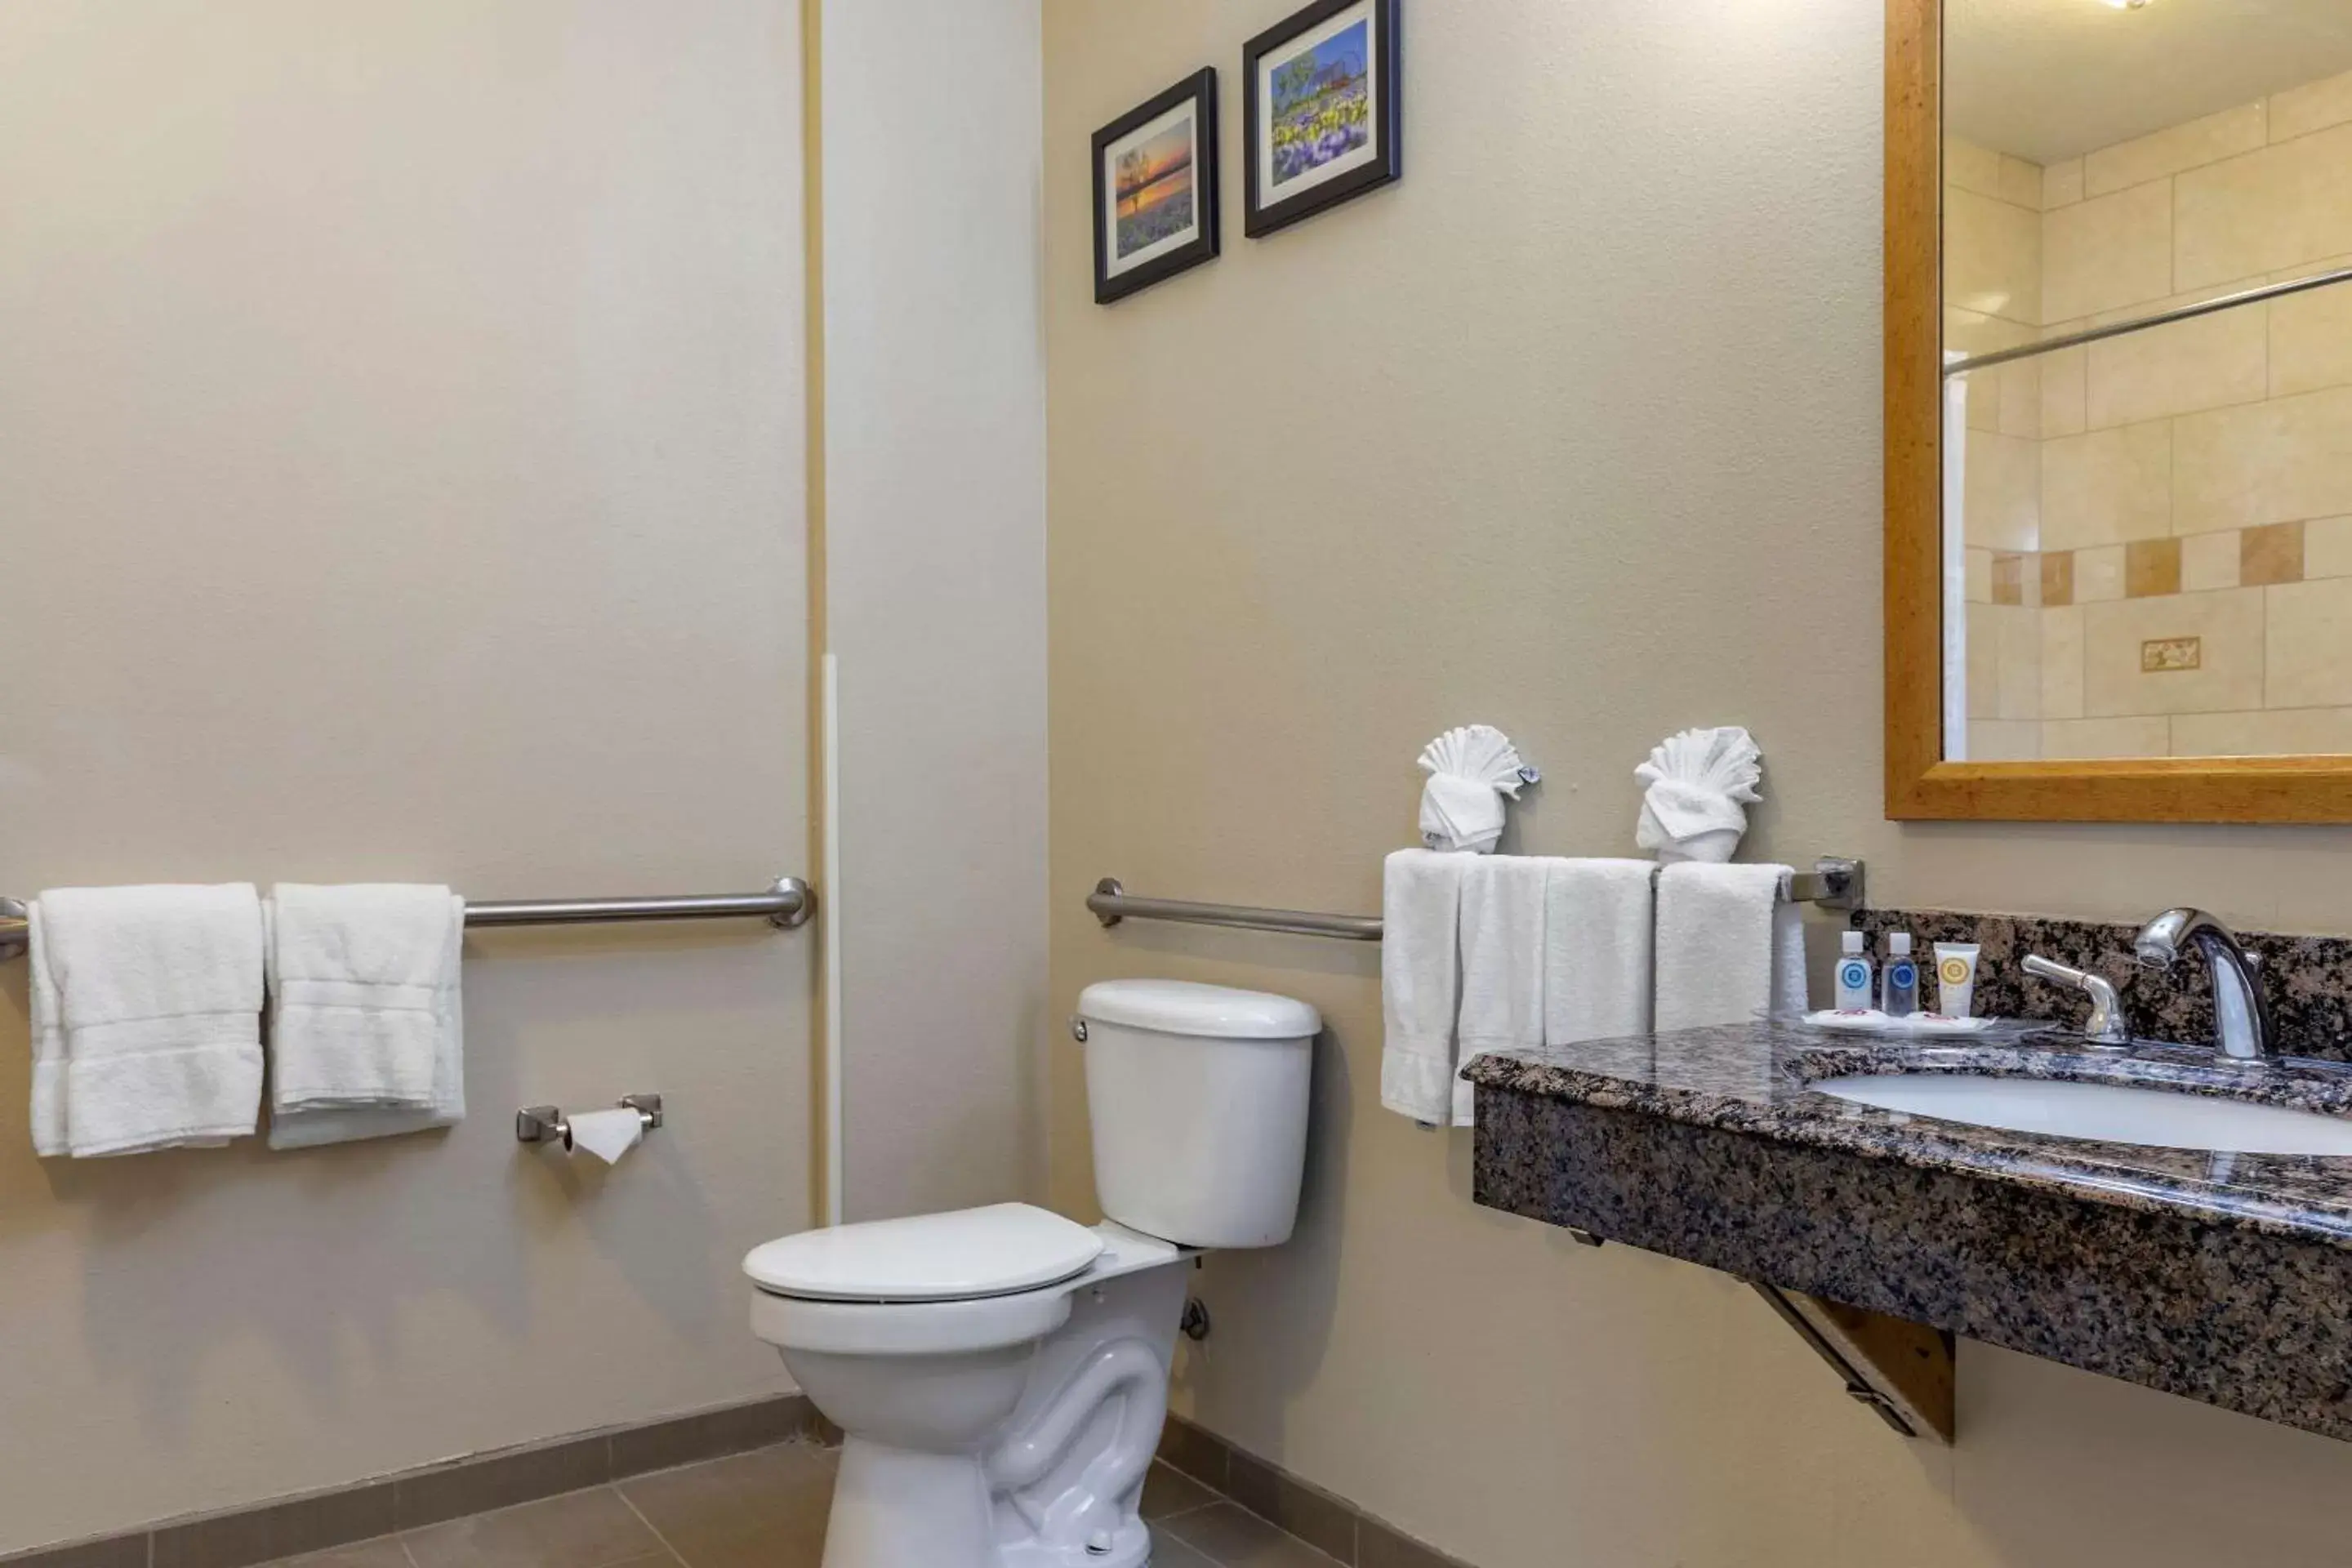 Photo of the whole room, Bathroom in Comfort Suites Plano - Dallas North